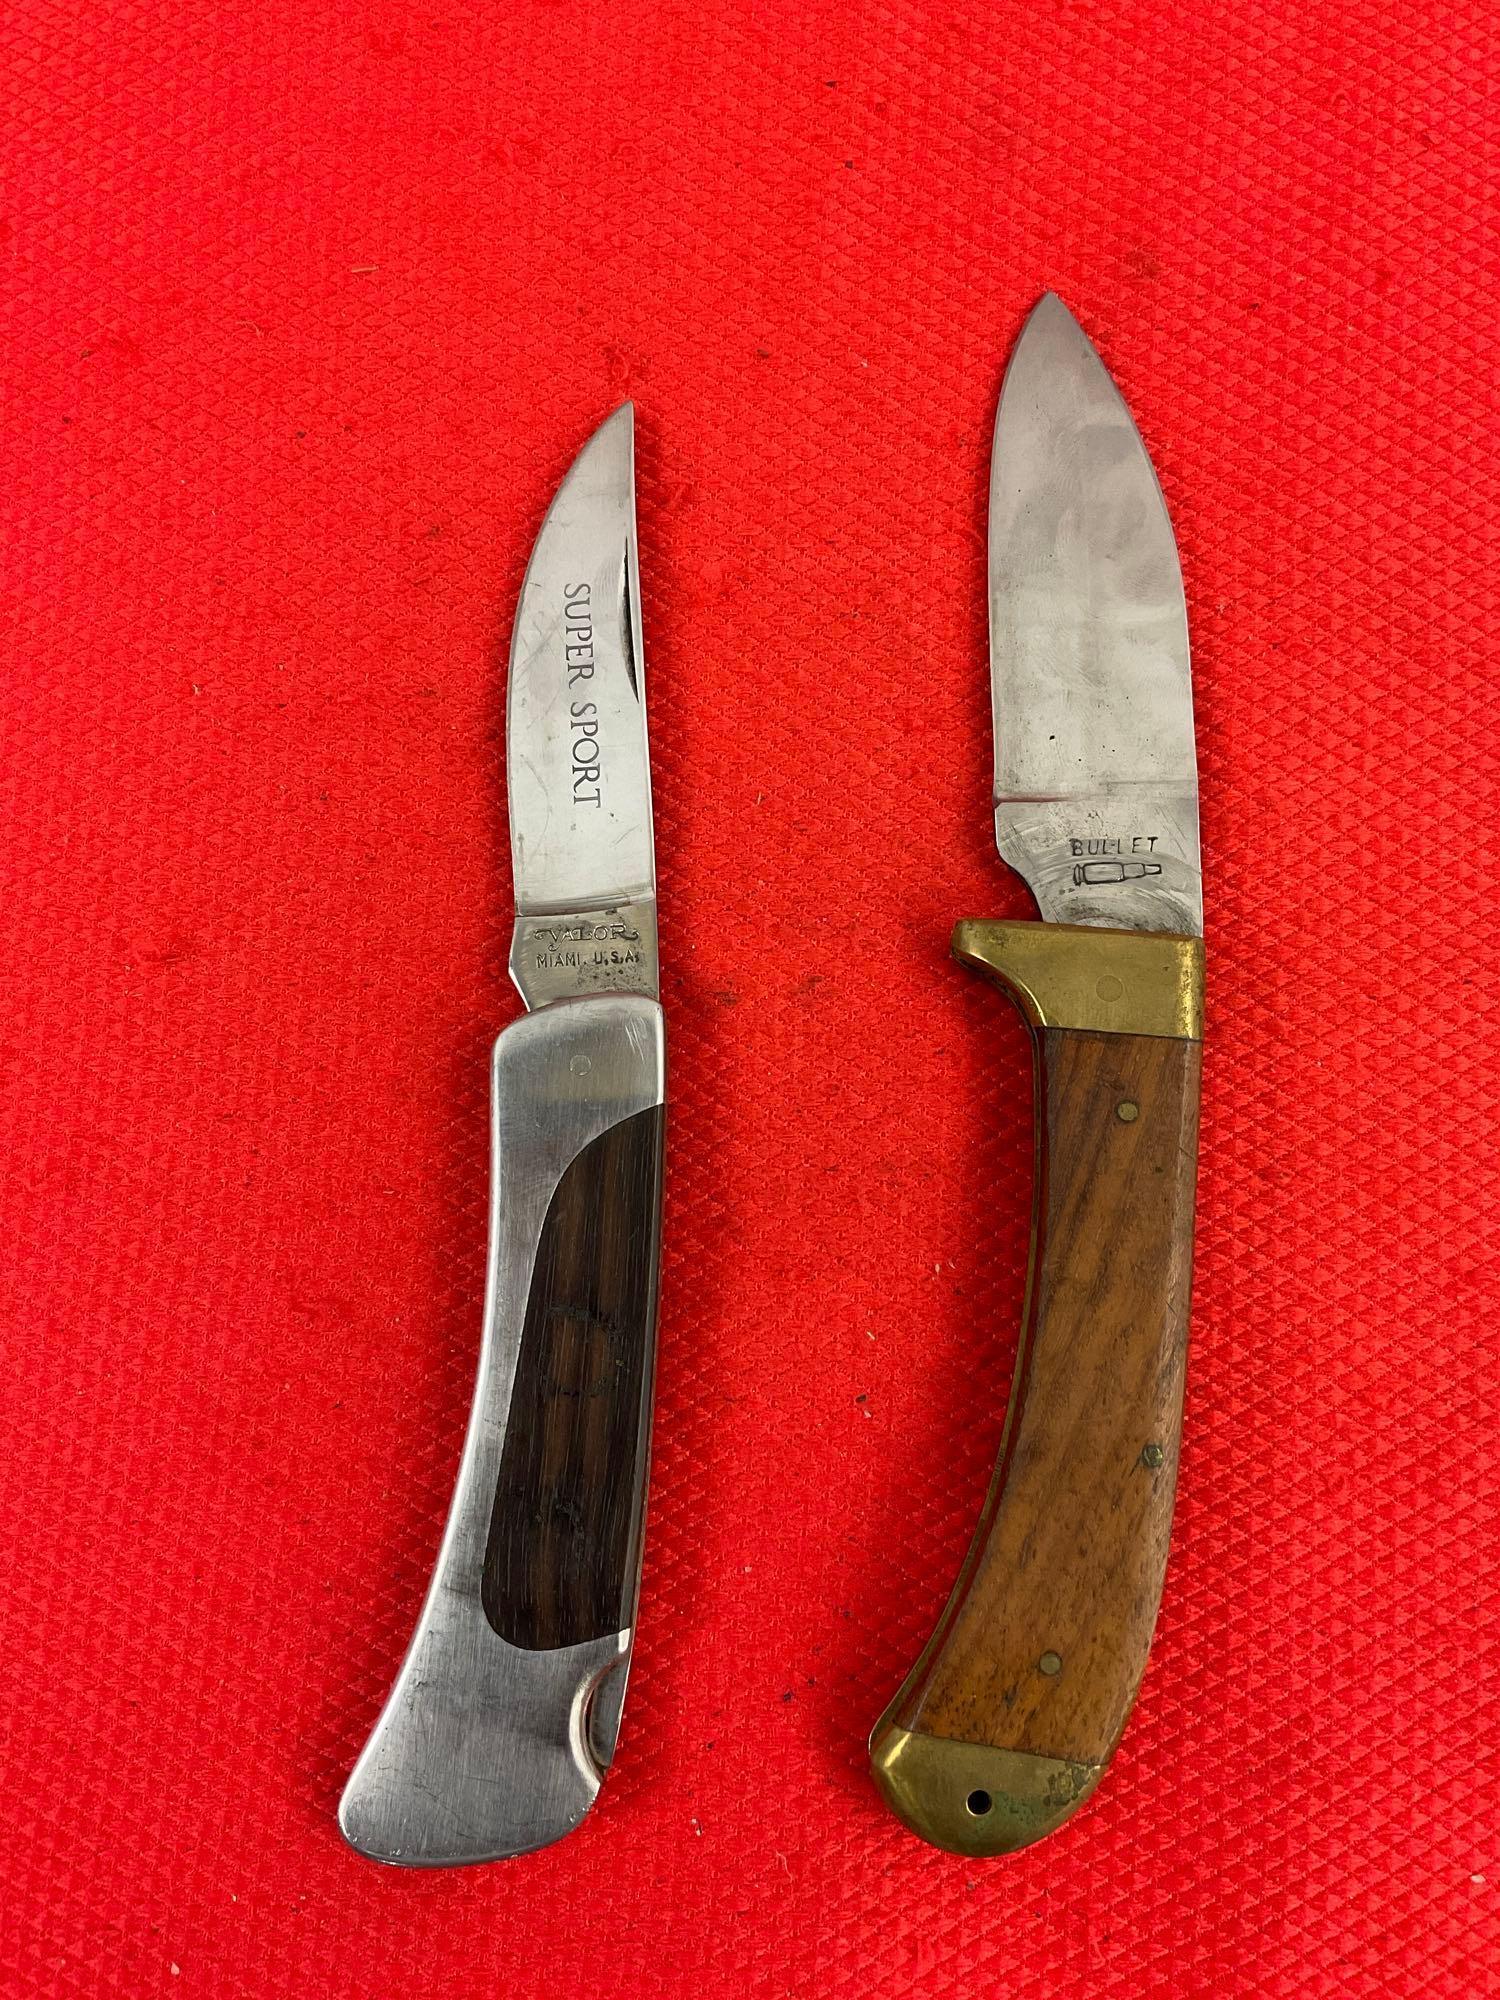 2 pcs Vintage Steel Folding Blade Pocket Knives w/ Sheathes. 1x Valor 315, 1x Bullet 13052. See